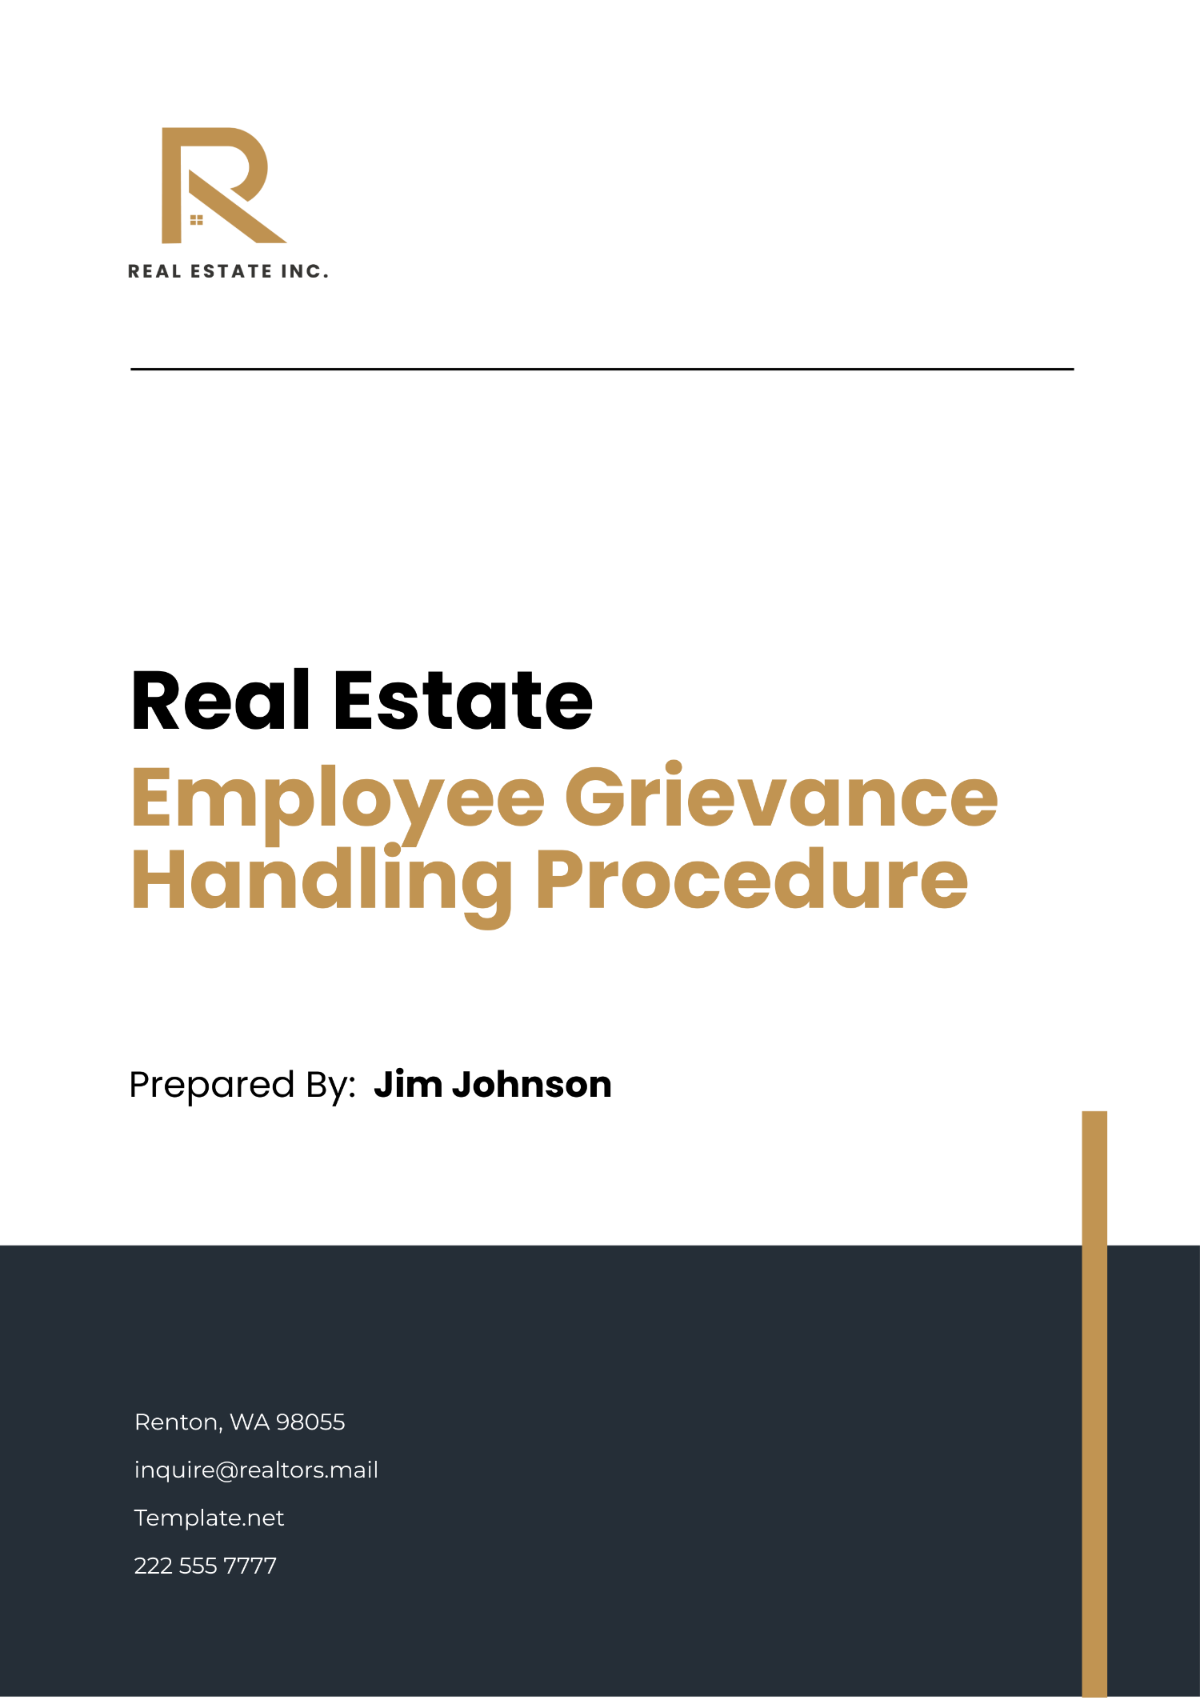 Real Estate Employee Grievance Handling Procedure Template